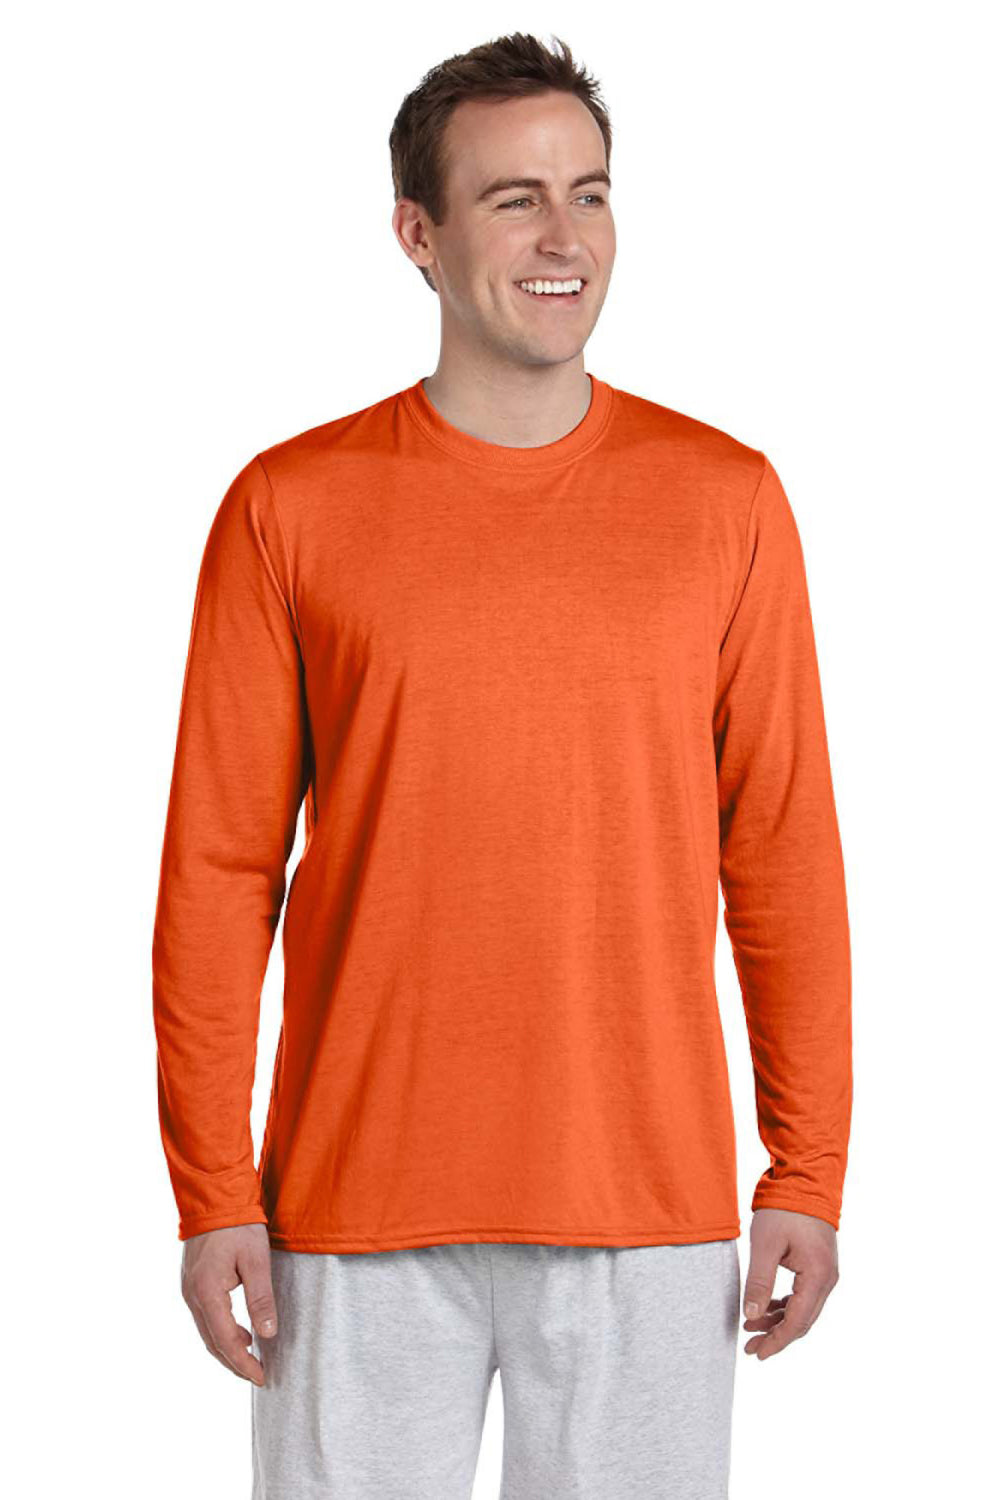 Gildan G424 Mens Performance Jersey Moisture Wicking Long Sleeve Crewneck T-Shirt Orange Front